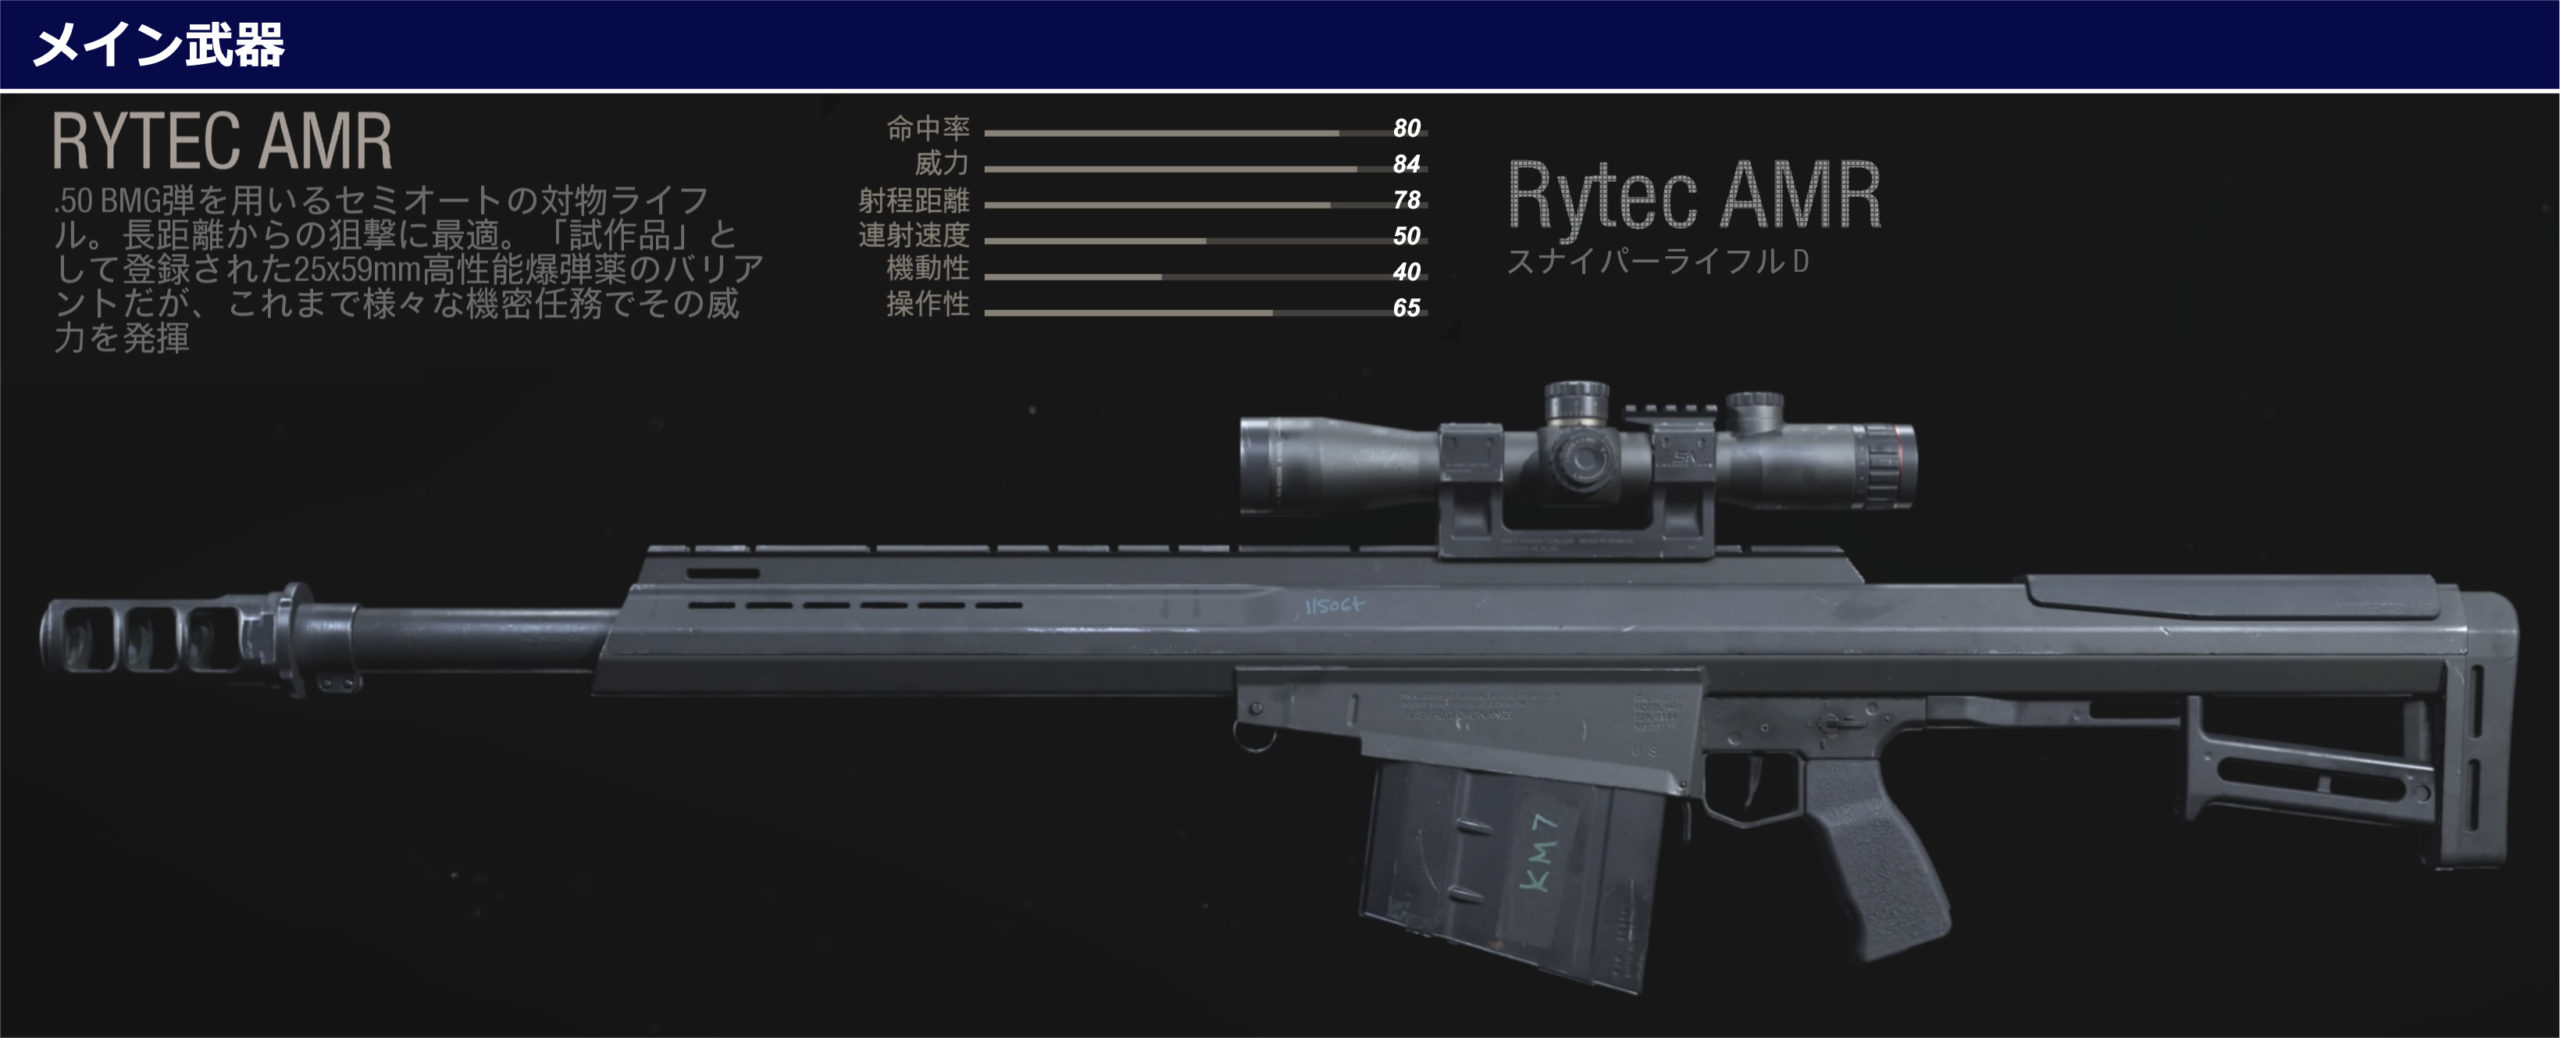 Rytec-AMR